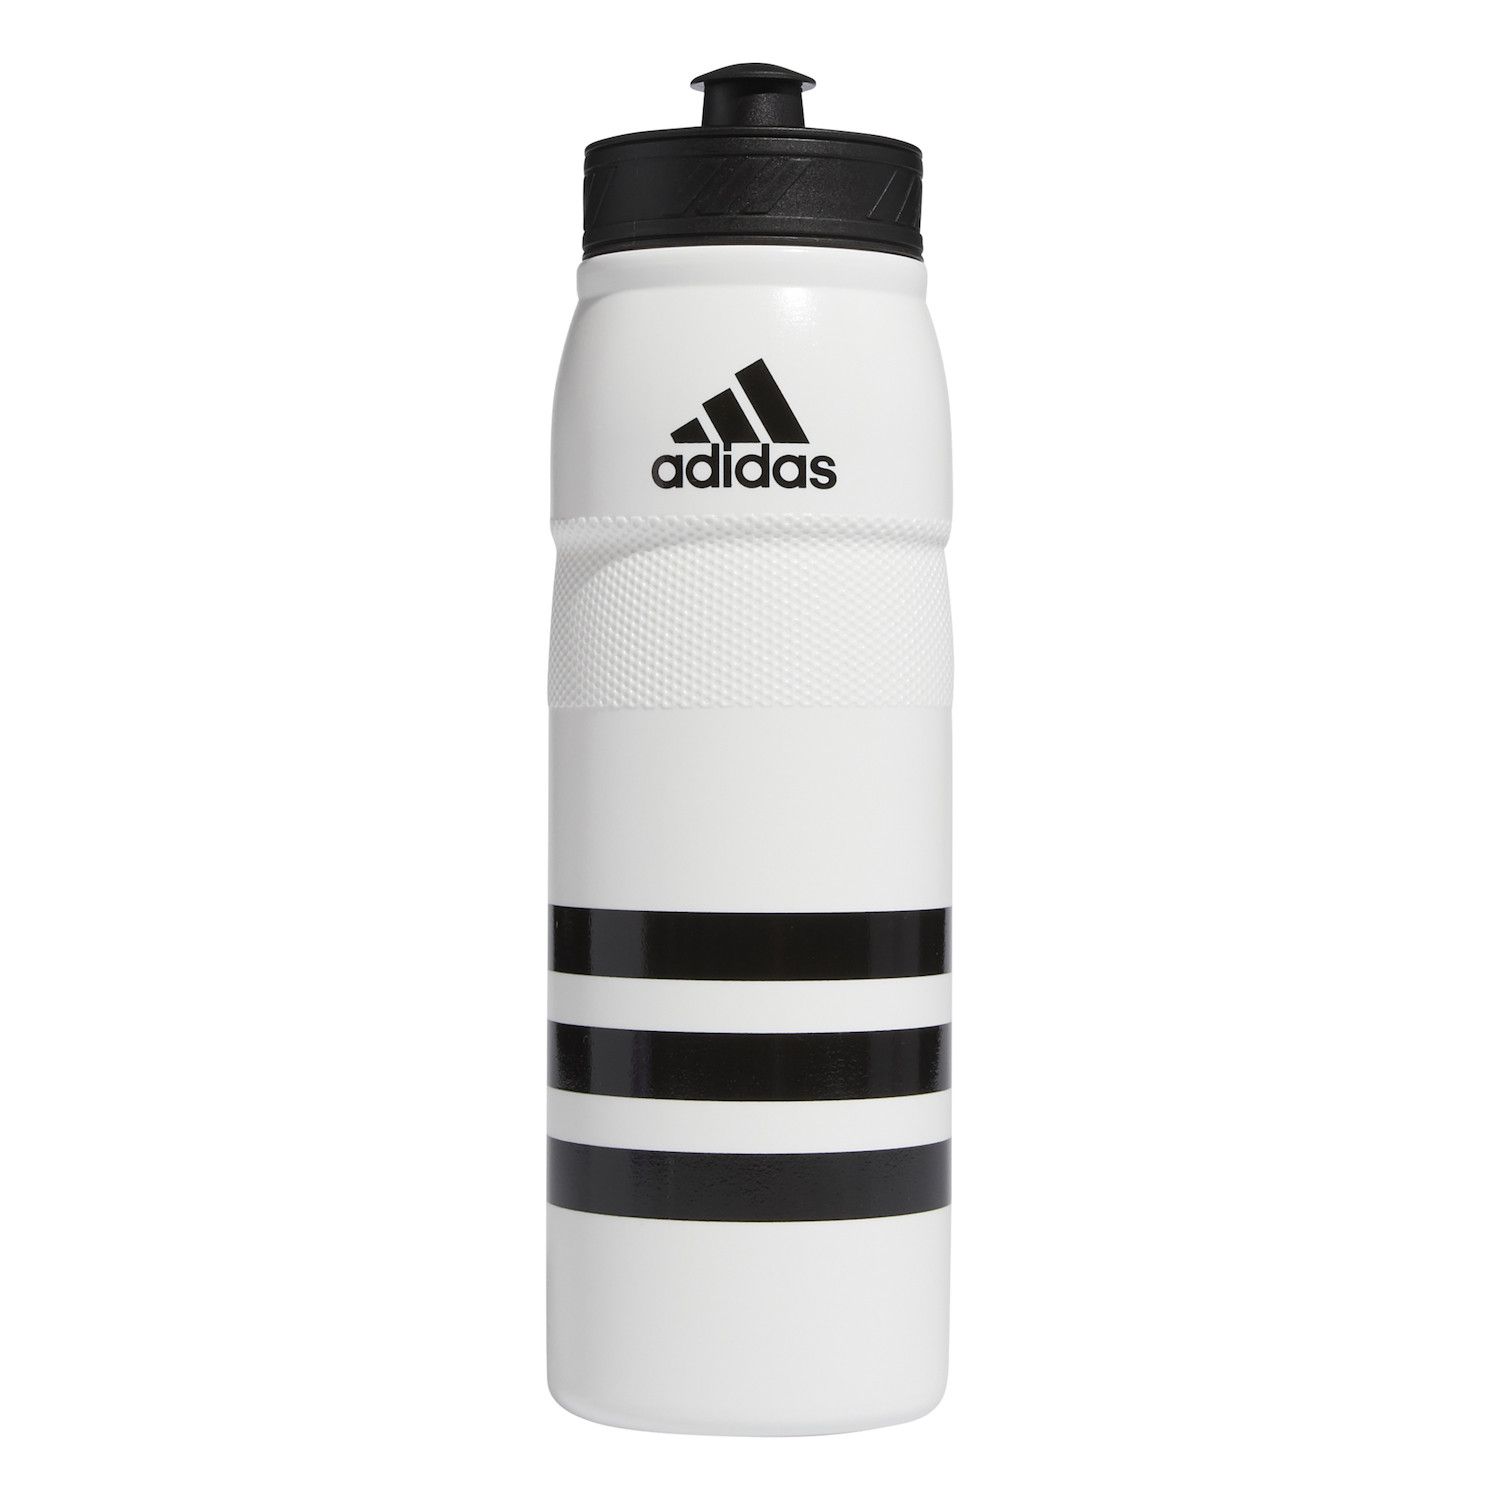 adidas drink bottle